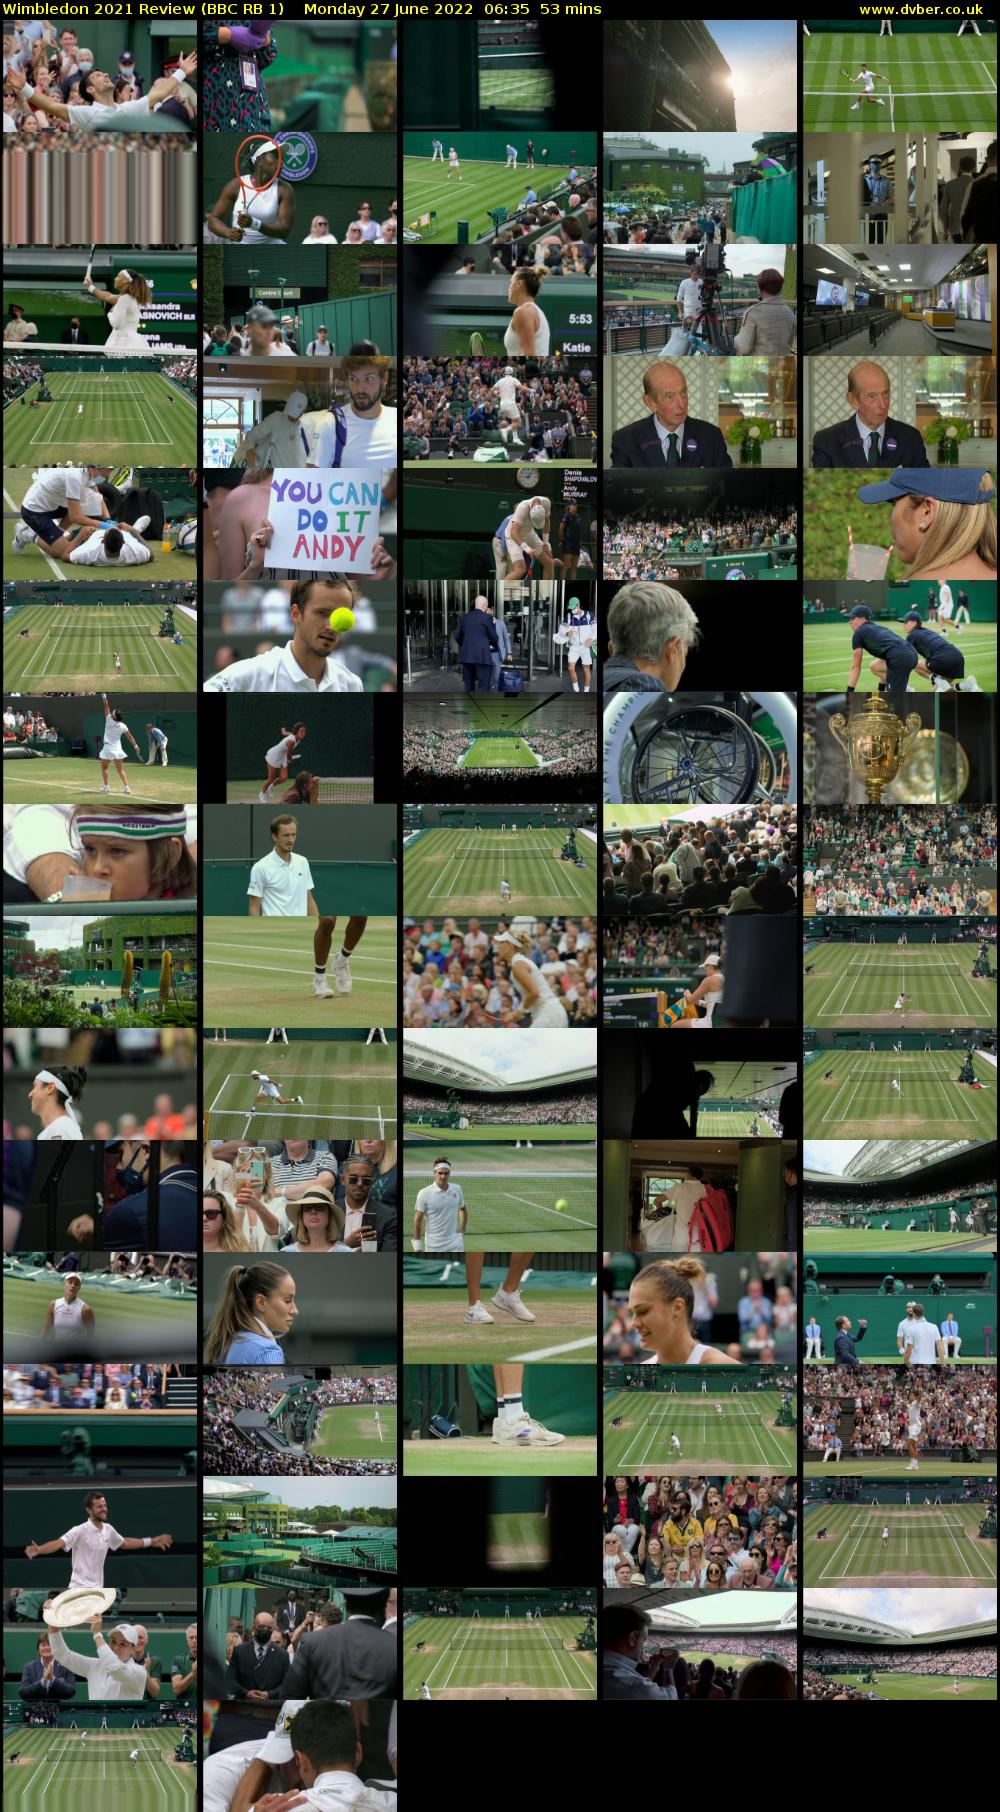 Wimbledon 2021 Review (BBC RB 1) Monday 27 June 2022 06:35 - 07:28